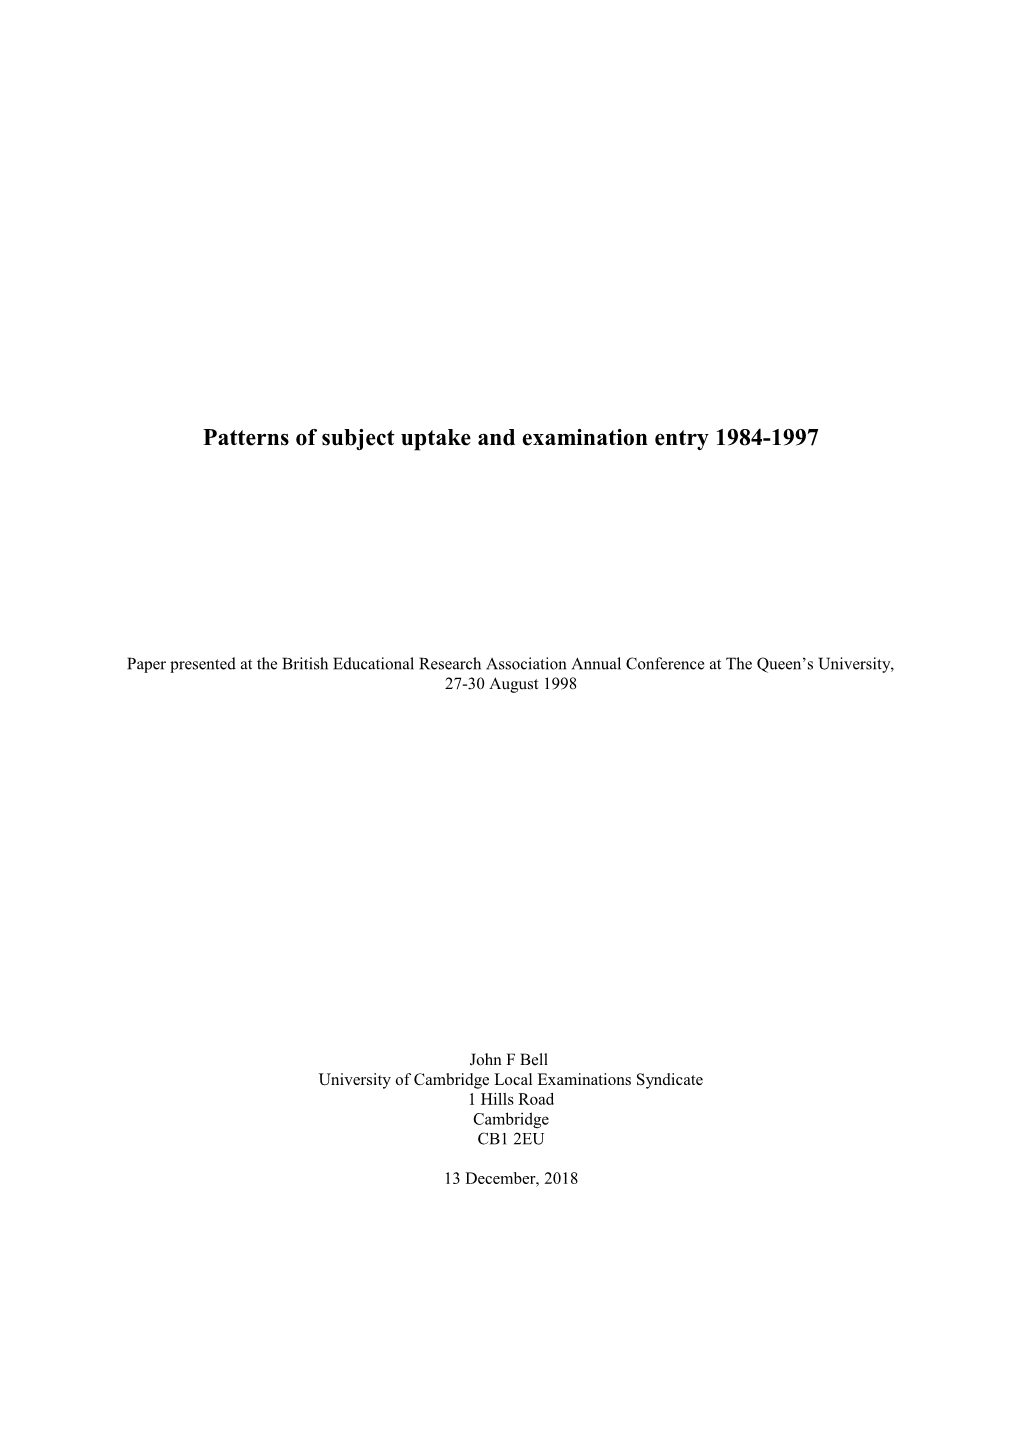 Patterns of Subject Uptake and Examination Entry 1984-1997